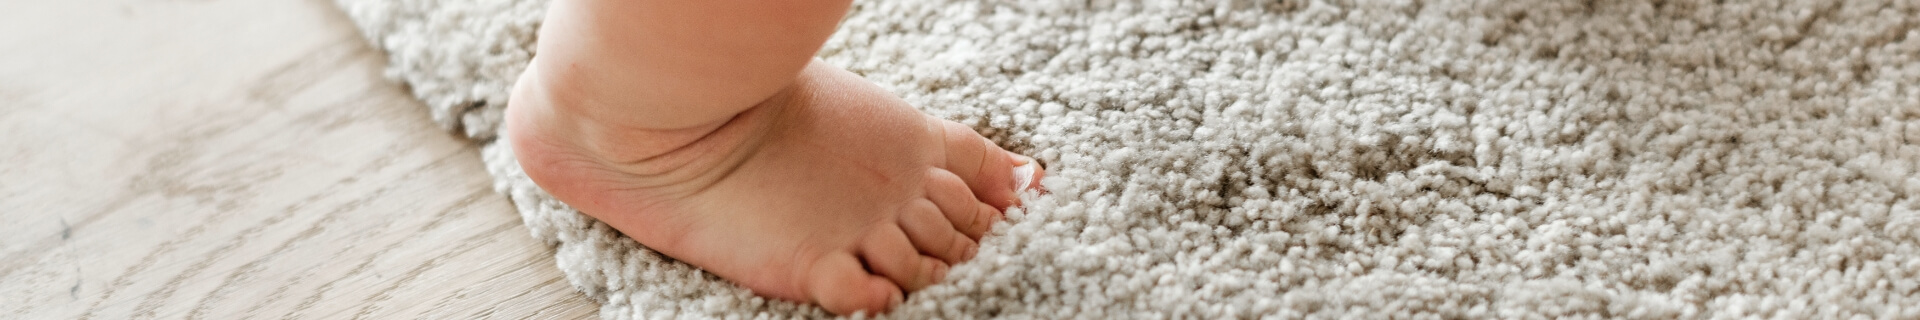 pieds de bebe